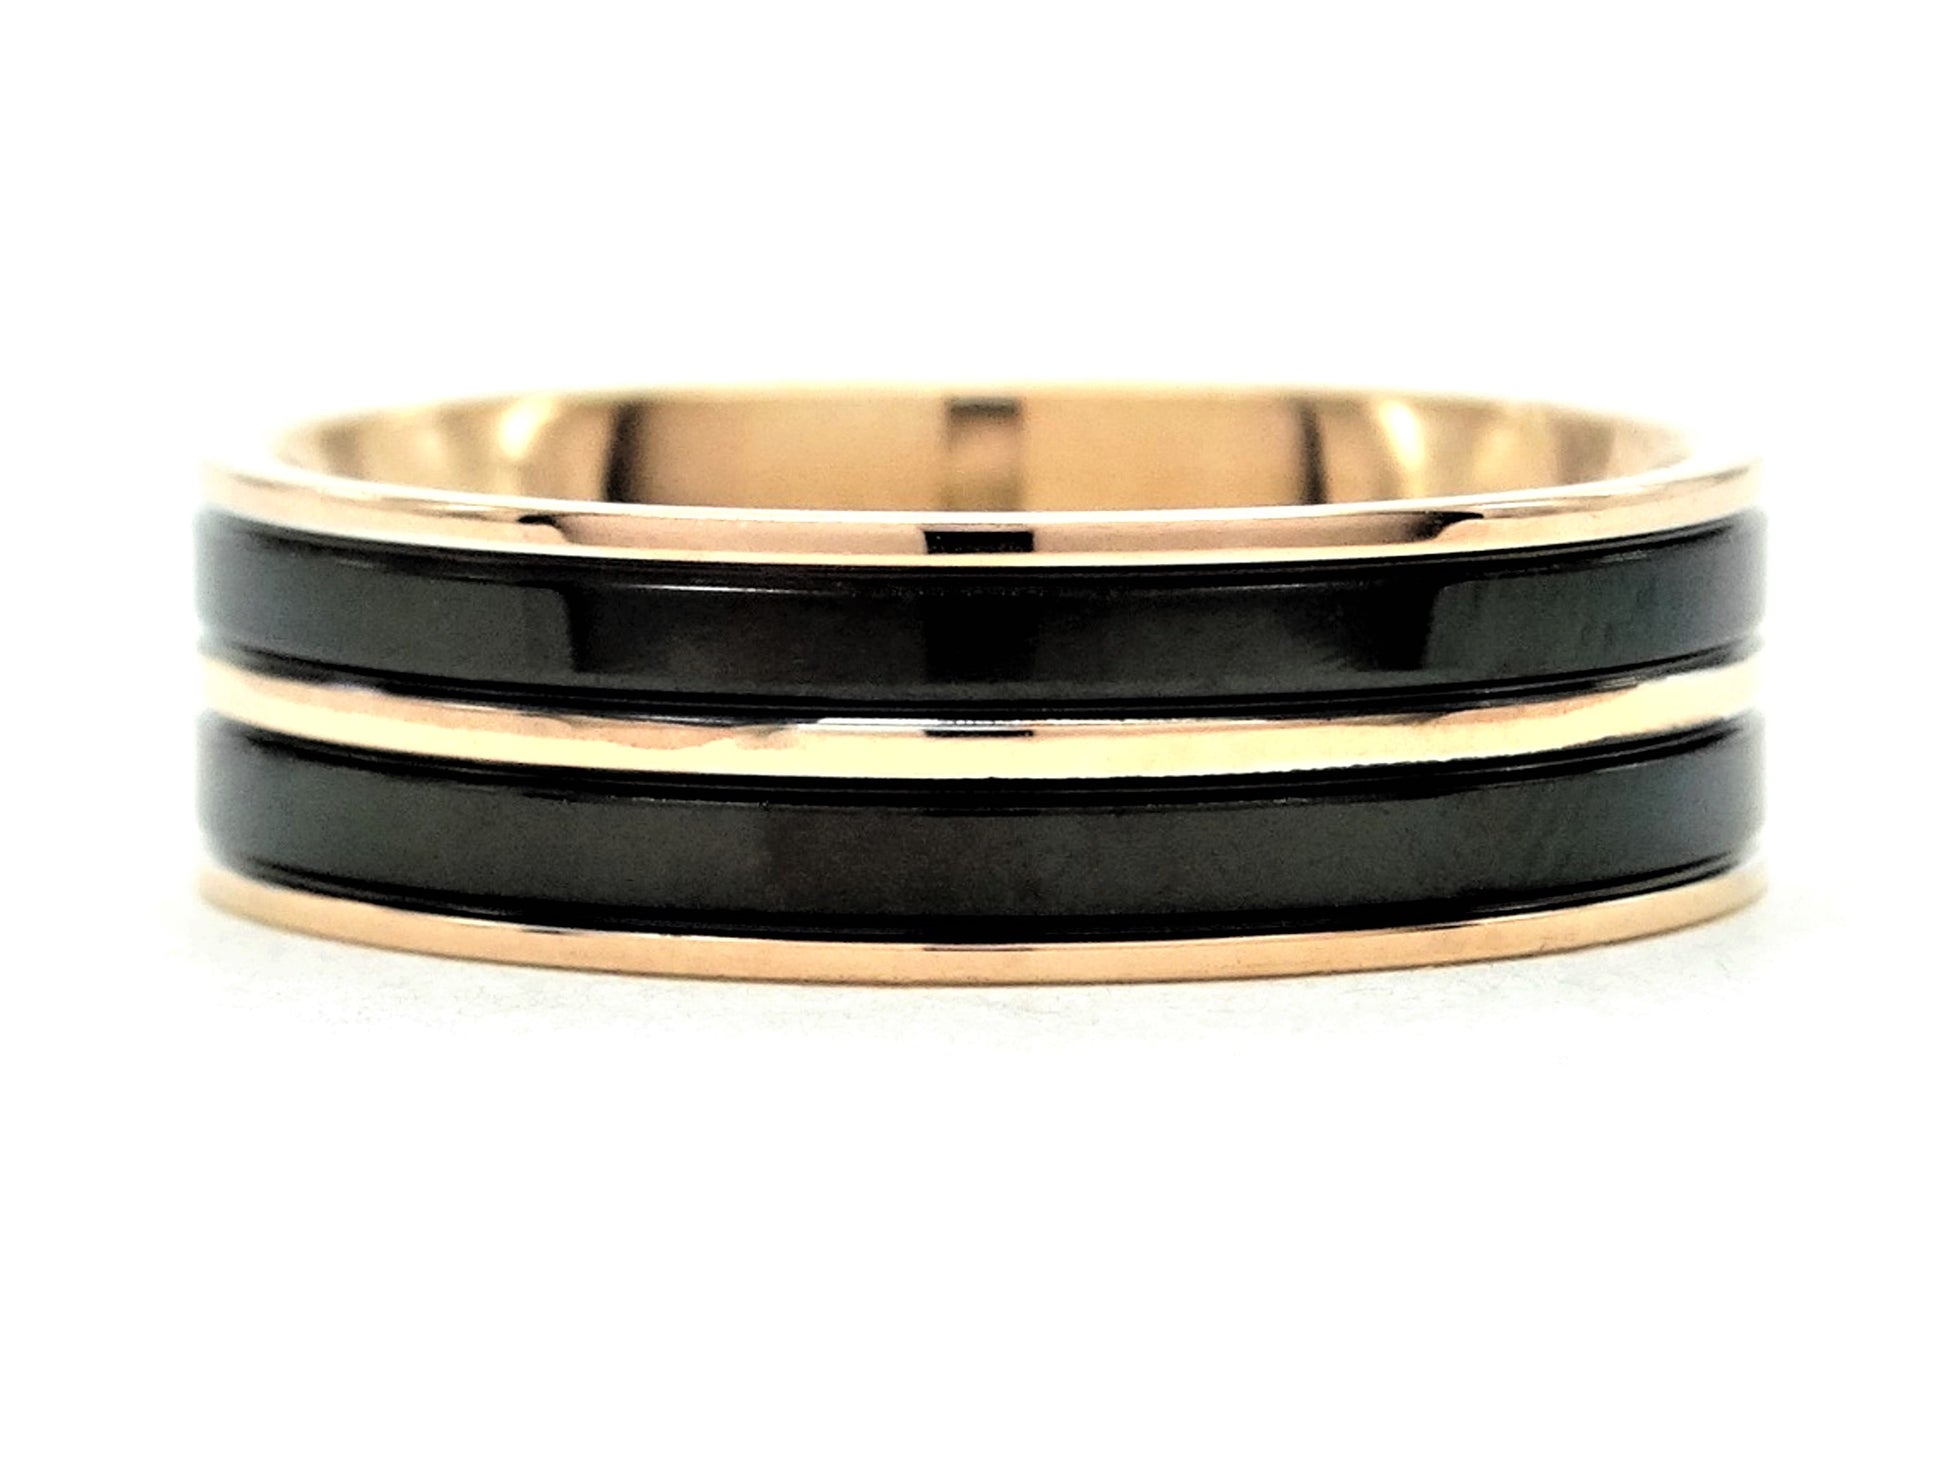 Rose gold steel black ring MAIN